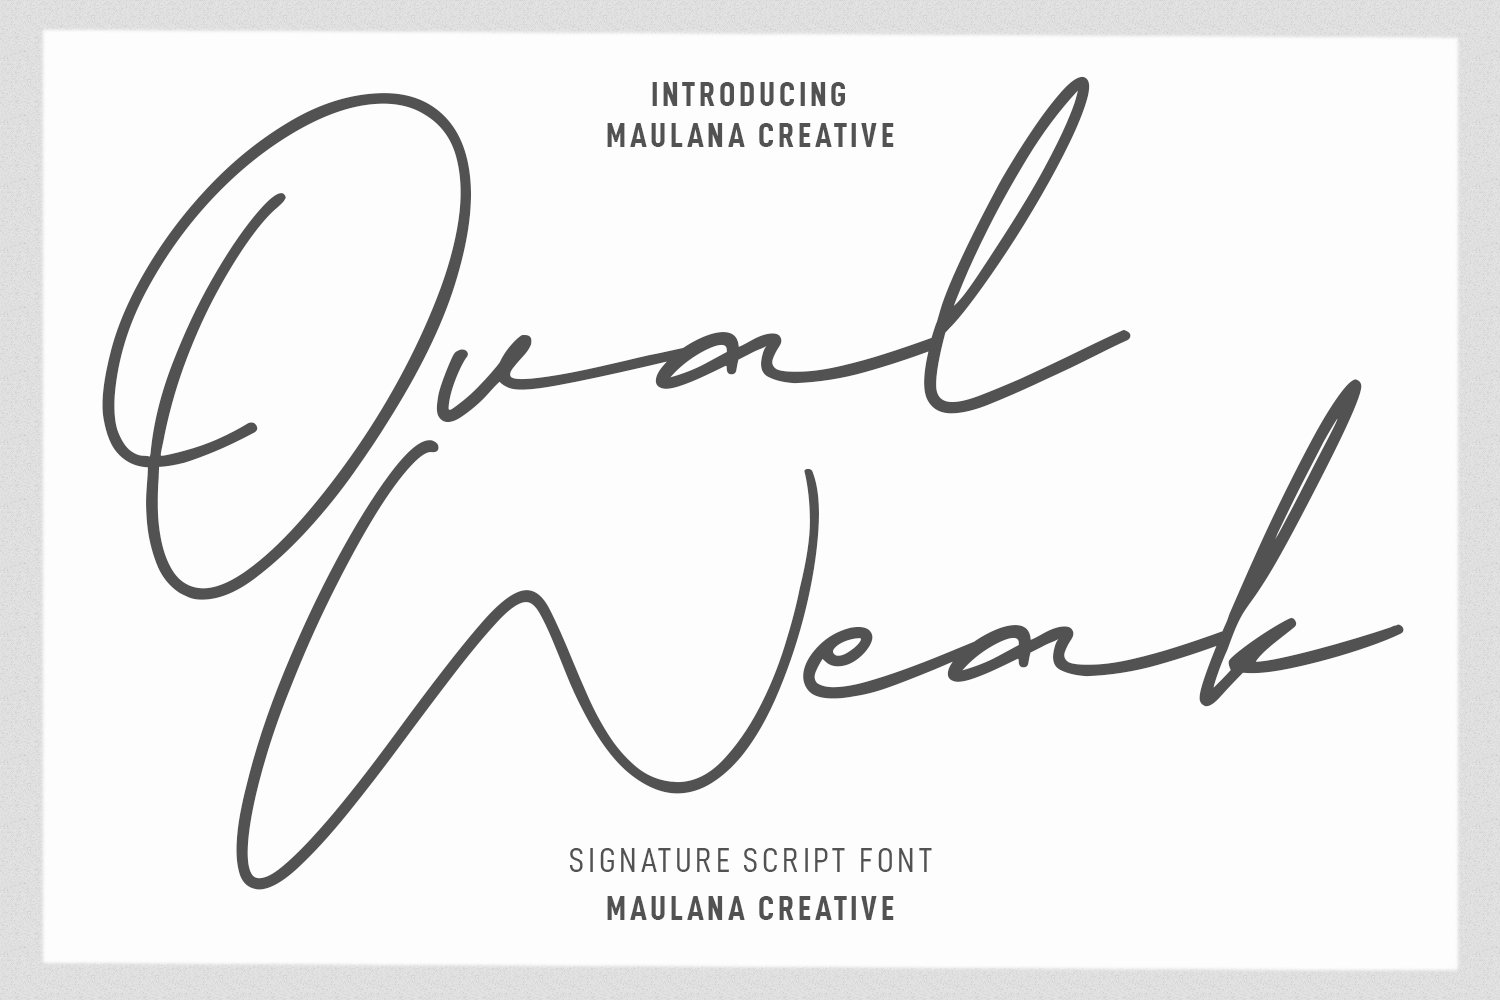 Ovalweak Signature Script Font cover image.